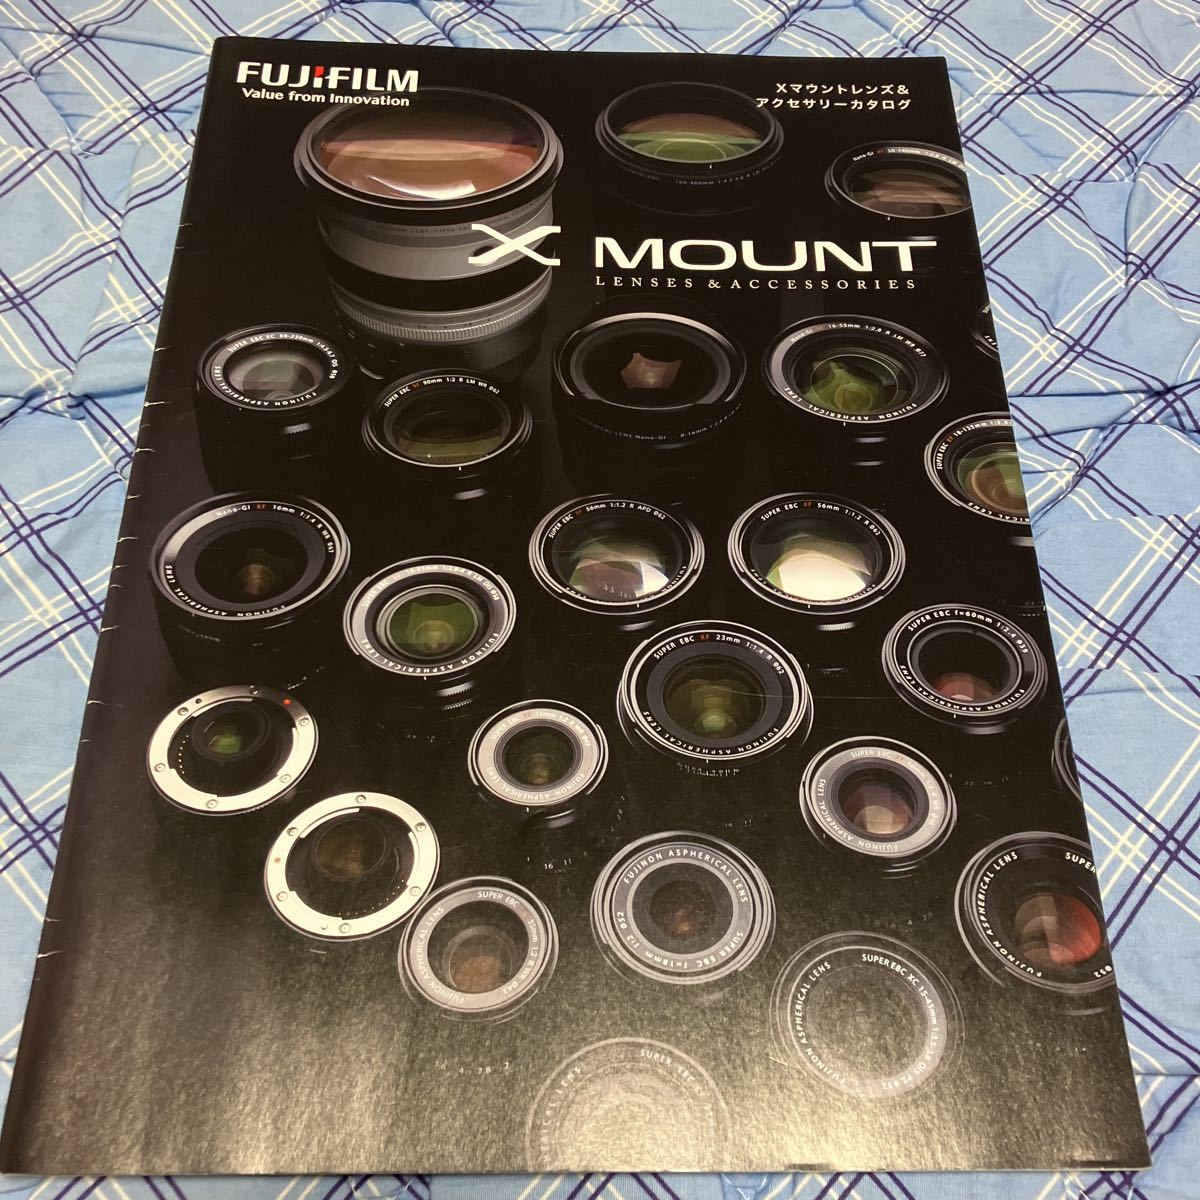  valuable FUJIFILM X MOUNT accessory 2019 year 12 month catalog Fuji Film lens lens camera * prompt decision 